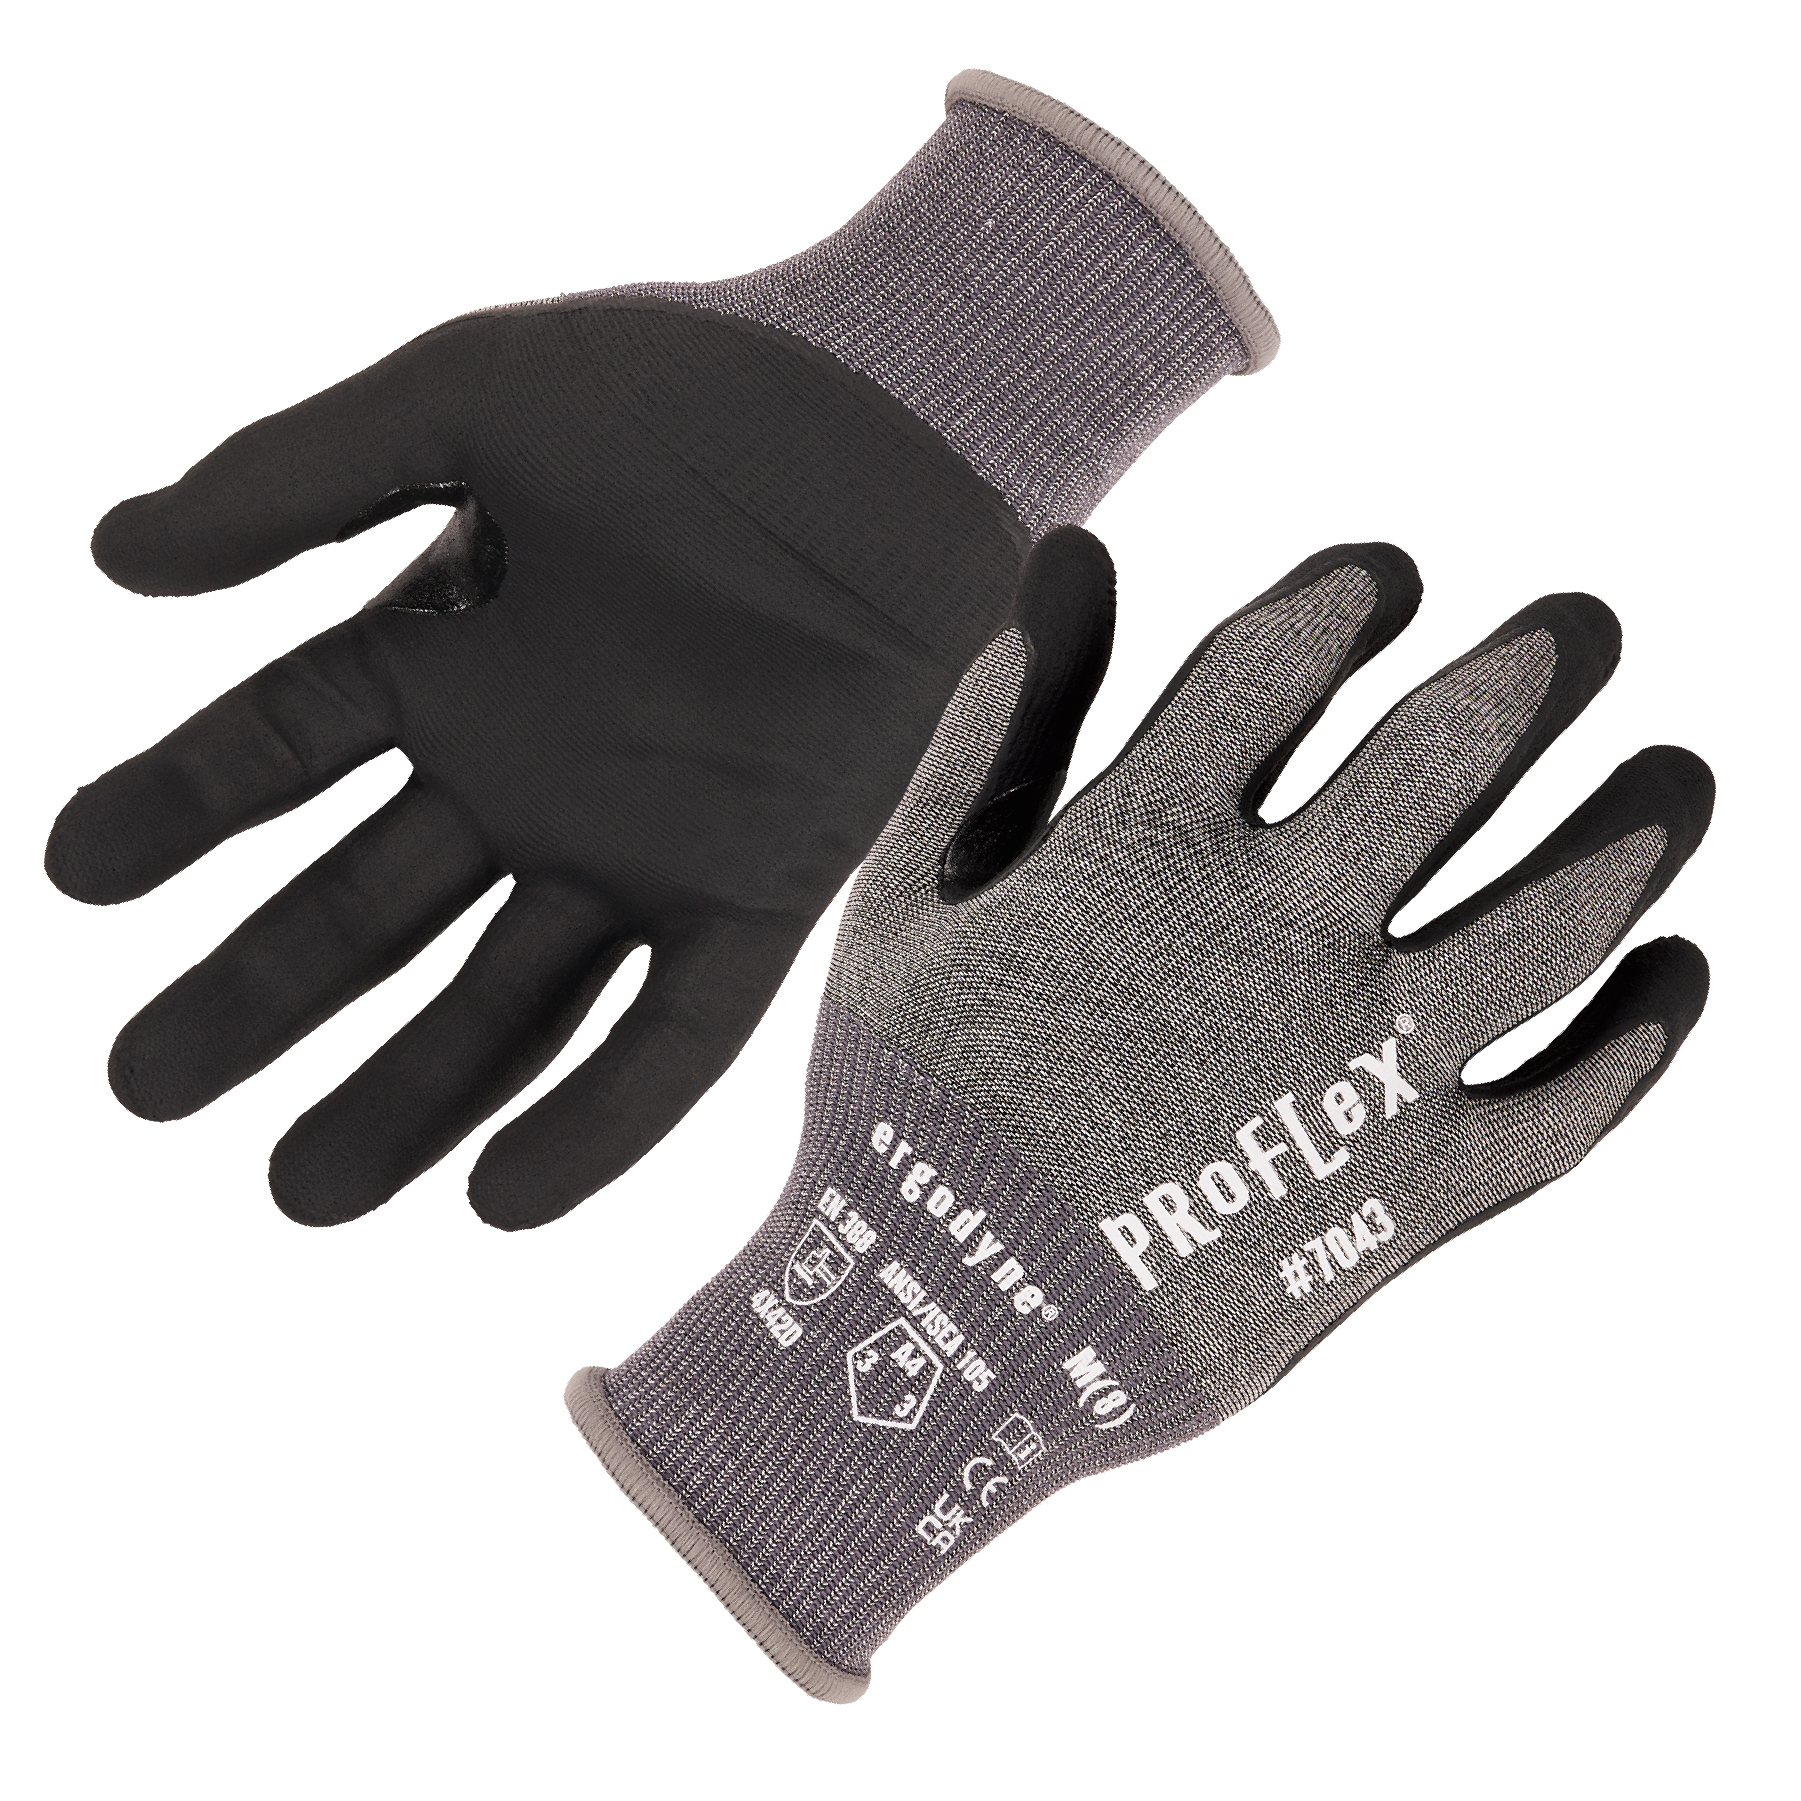 https://www.ergodyne.com/sites/default/files/product-images/10522-7043-nitrile-coated-cut-resistant-gloves-small.jpg